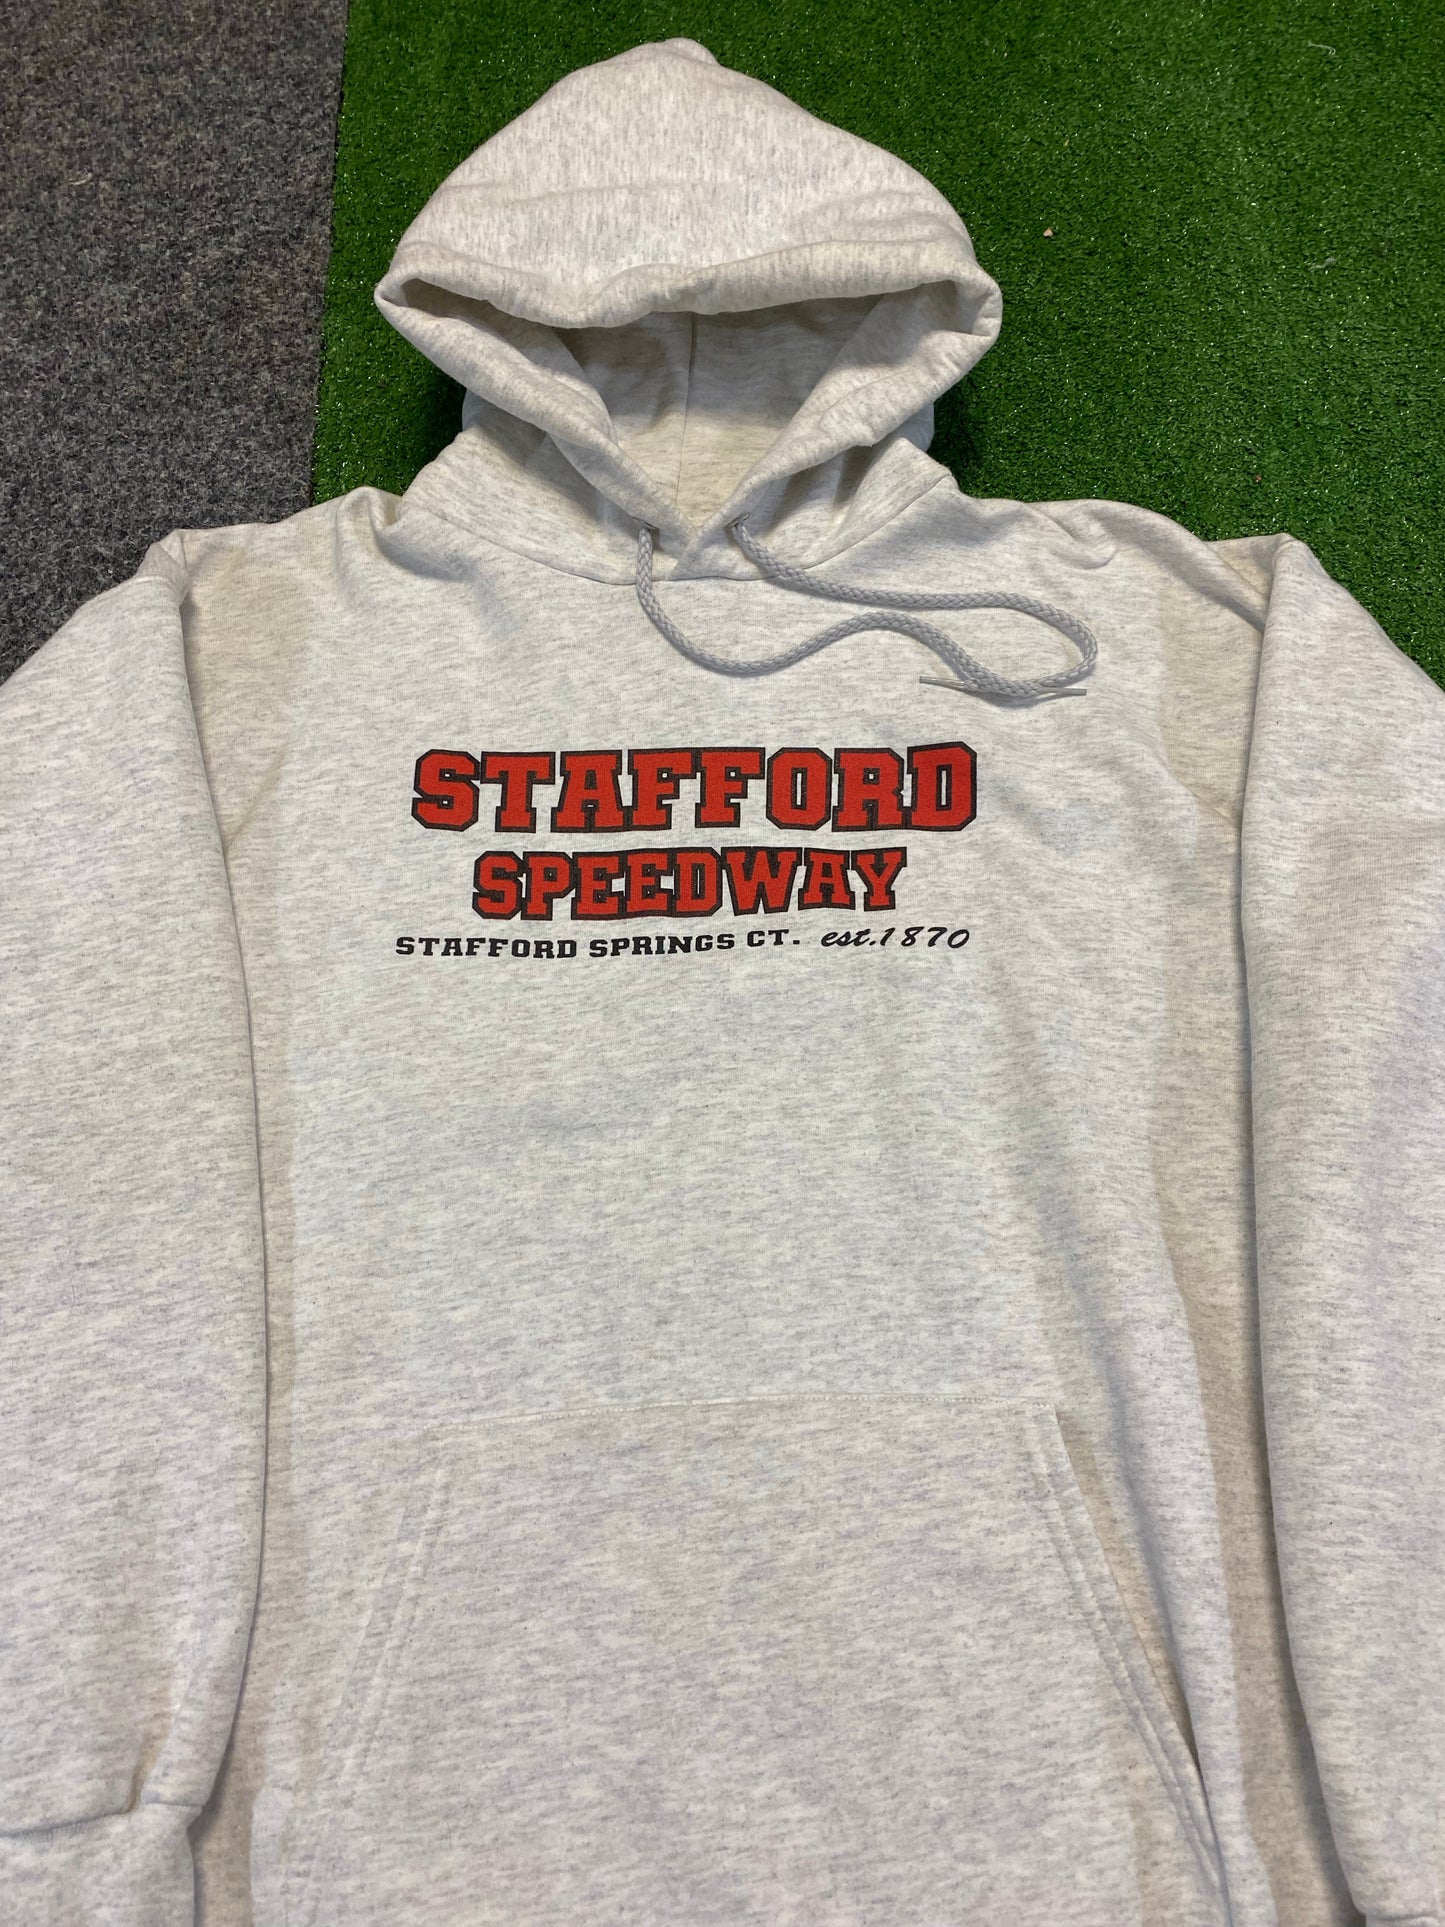 Hanes Ultimate Cotton Stafford Speedway Racing Sweatshirt